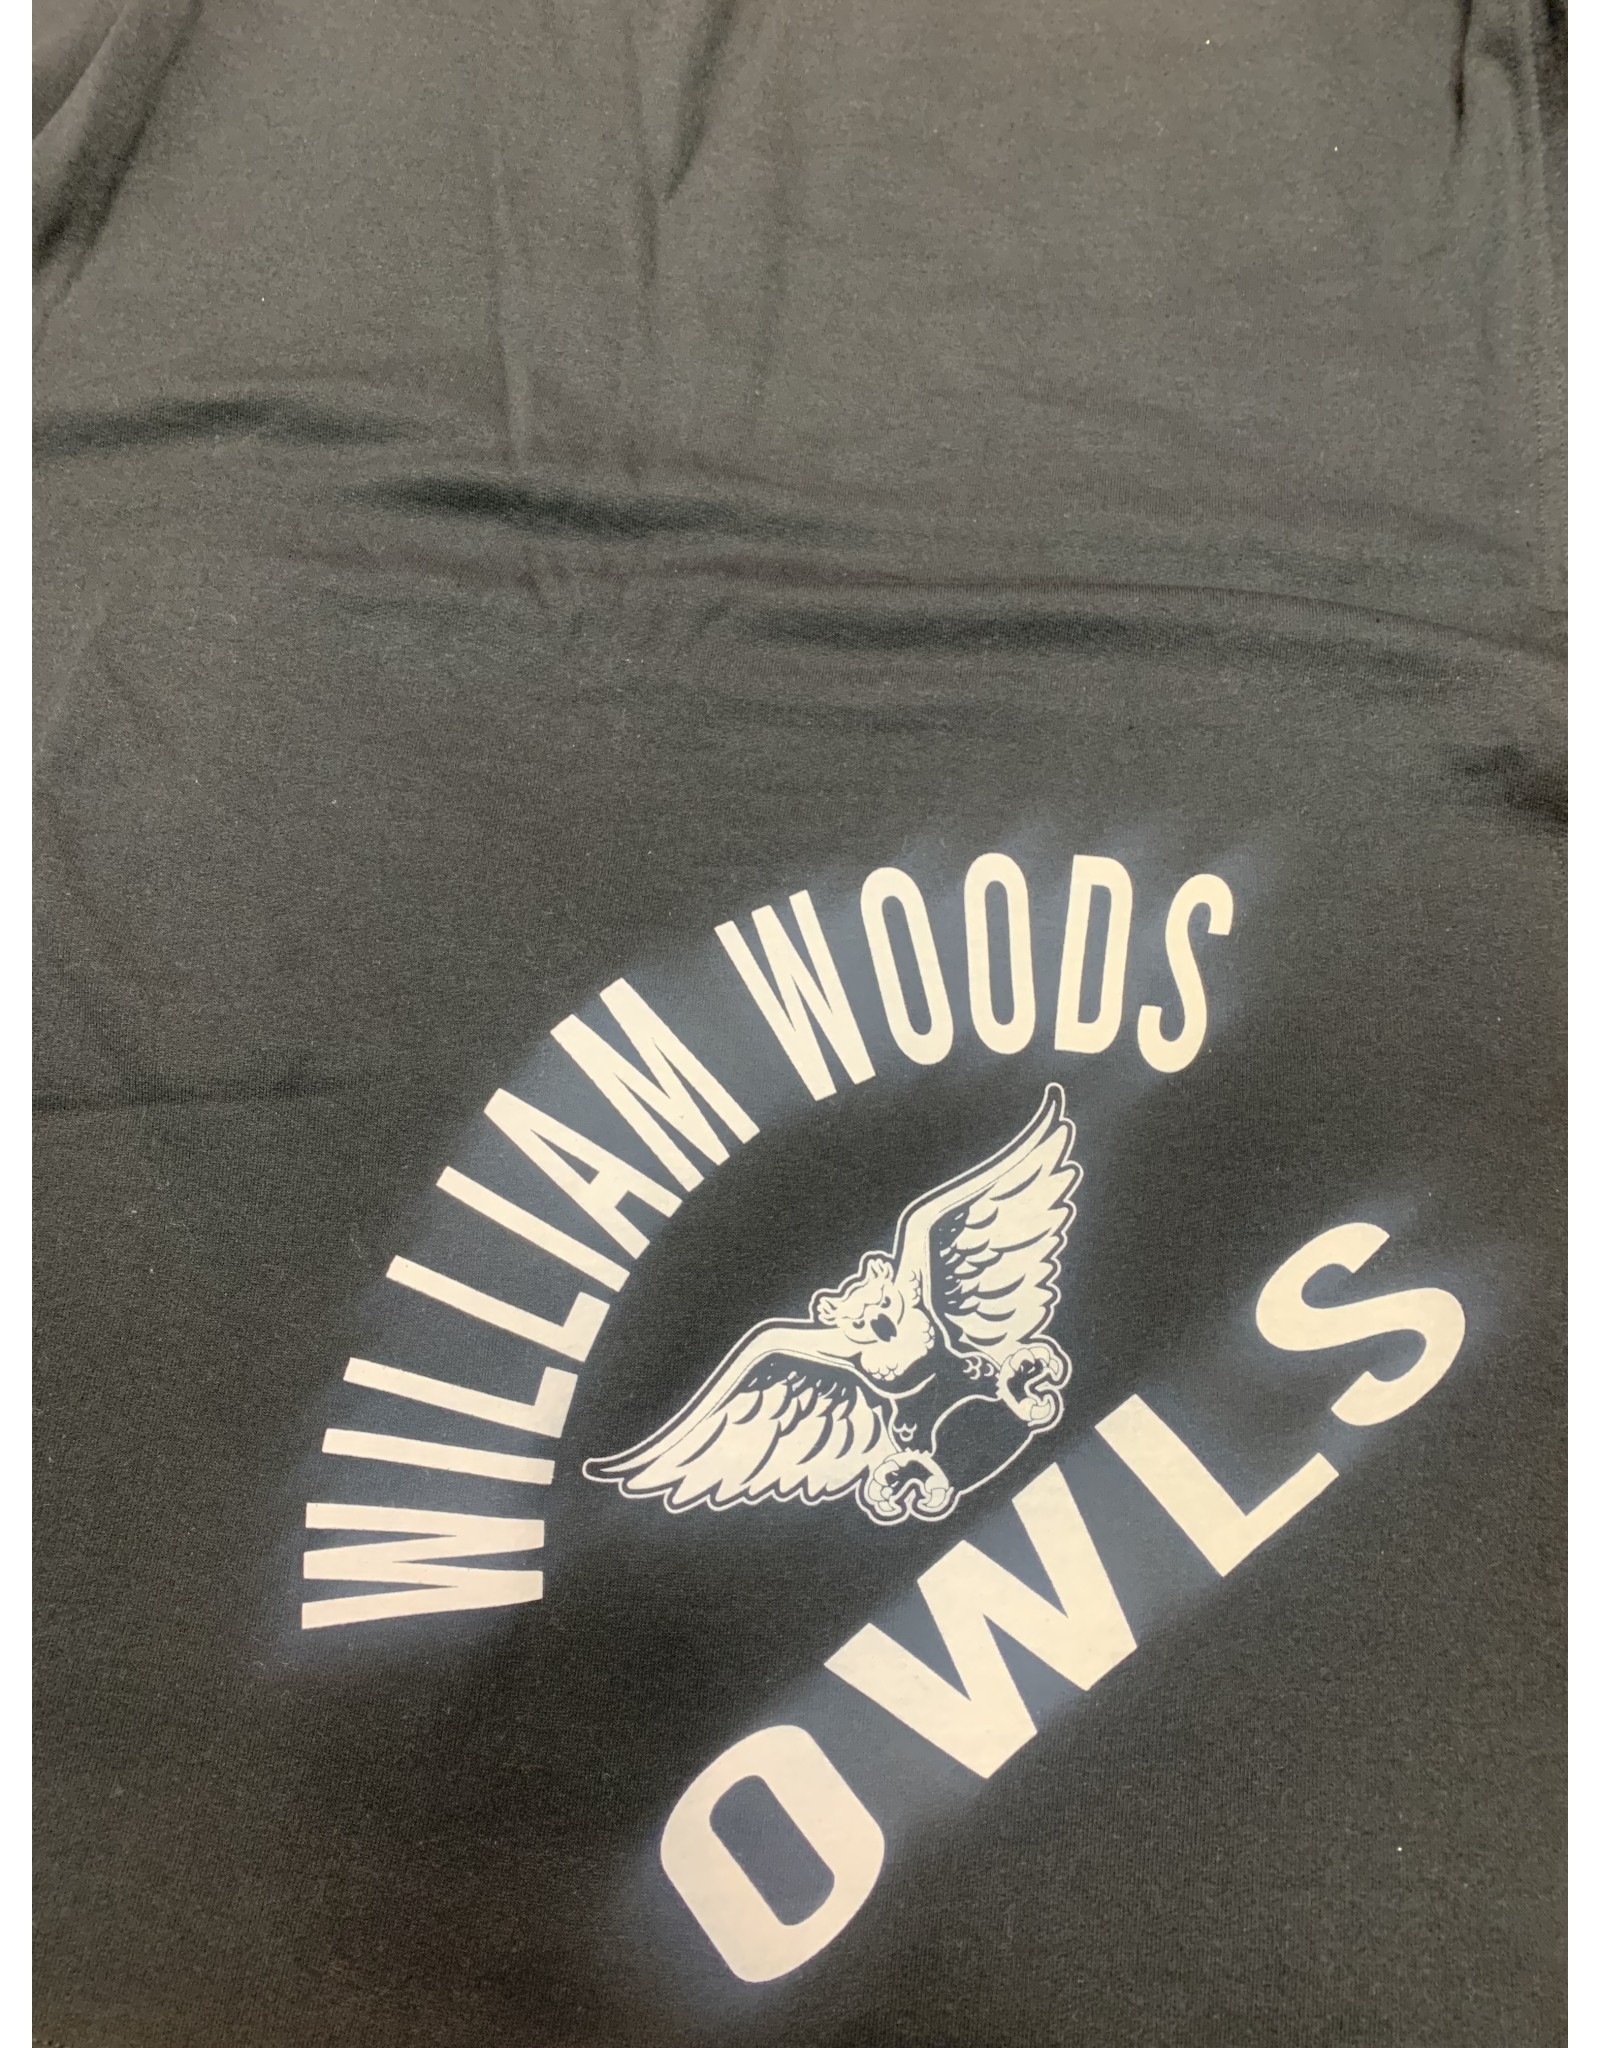 William Woods Owls (mascot) Sweatshirt blanket